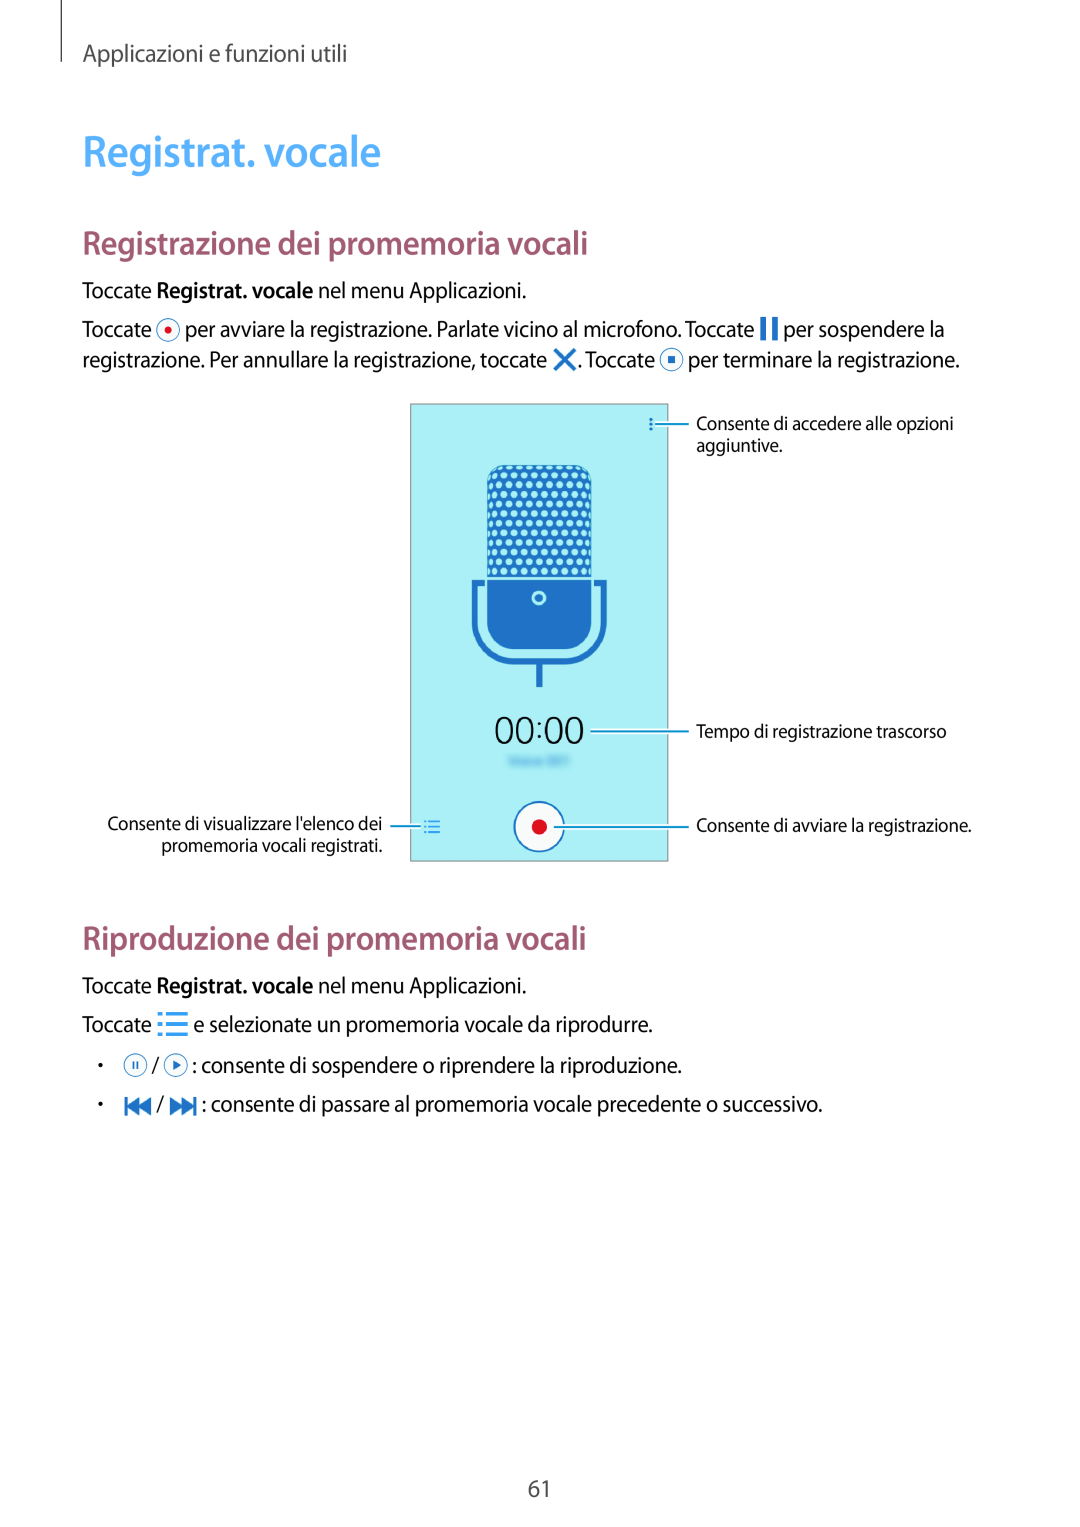 Samsung SM-G531FZWAPLS manual Registrat. vocale, Registrazione dei promemoria vocali, Riproduzione dei promemoria vocali 